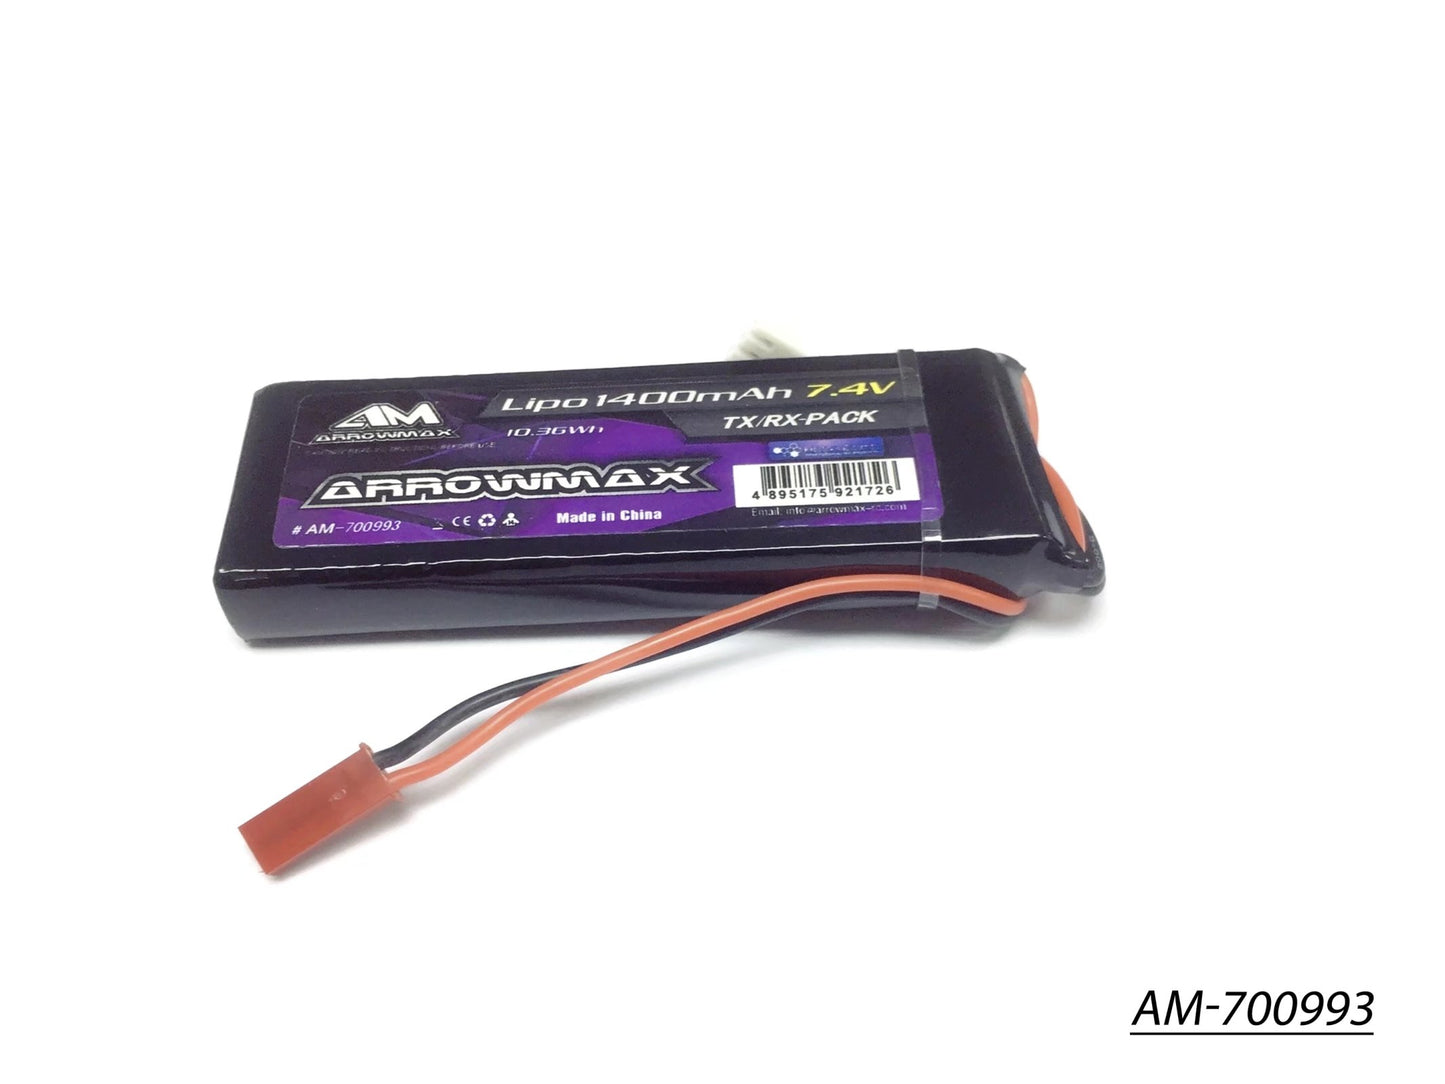 AM Lipo 1400mAh 7.4V Receiver Pack GP (JST Plug) (AM-700993)